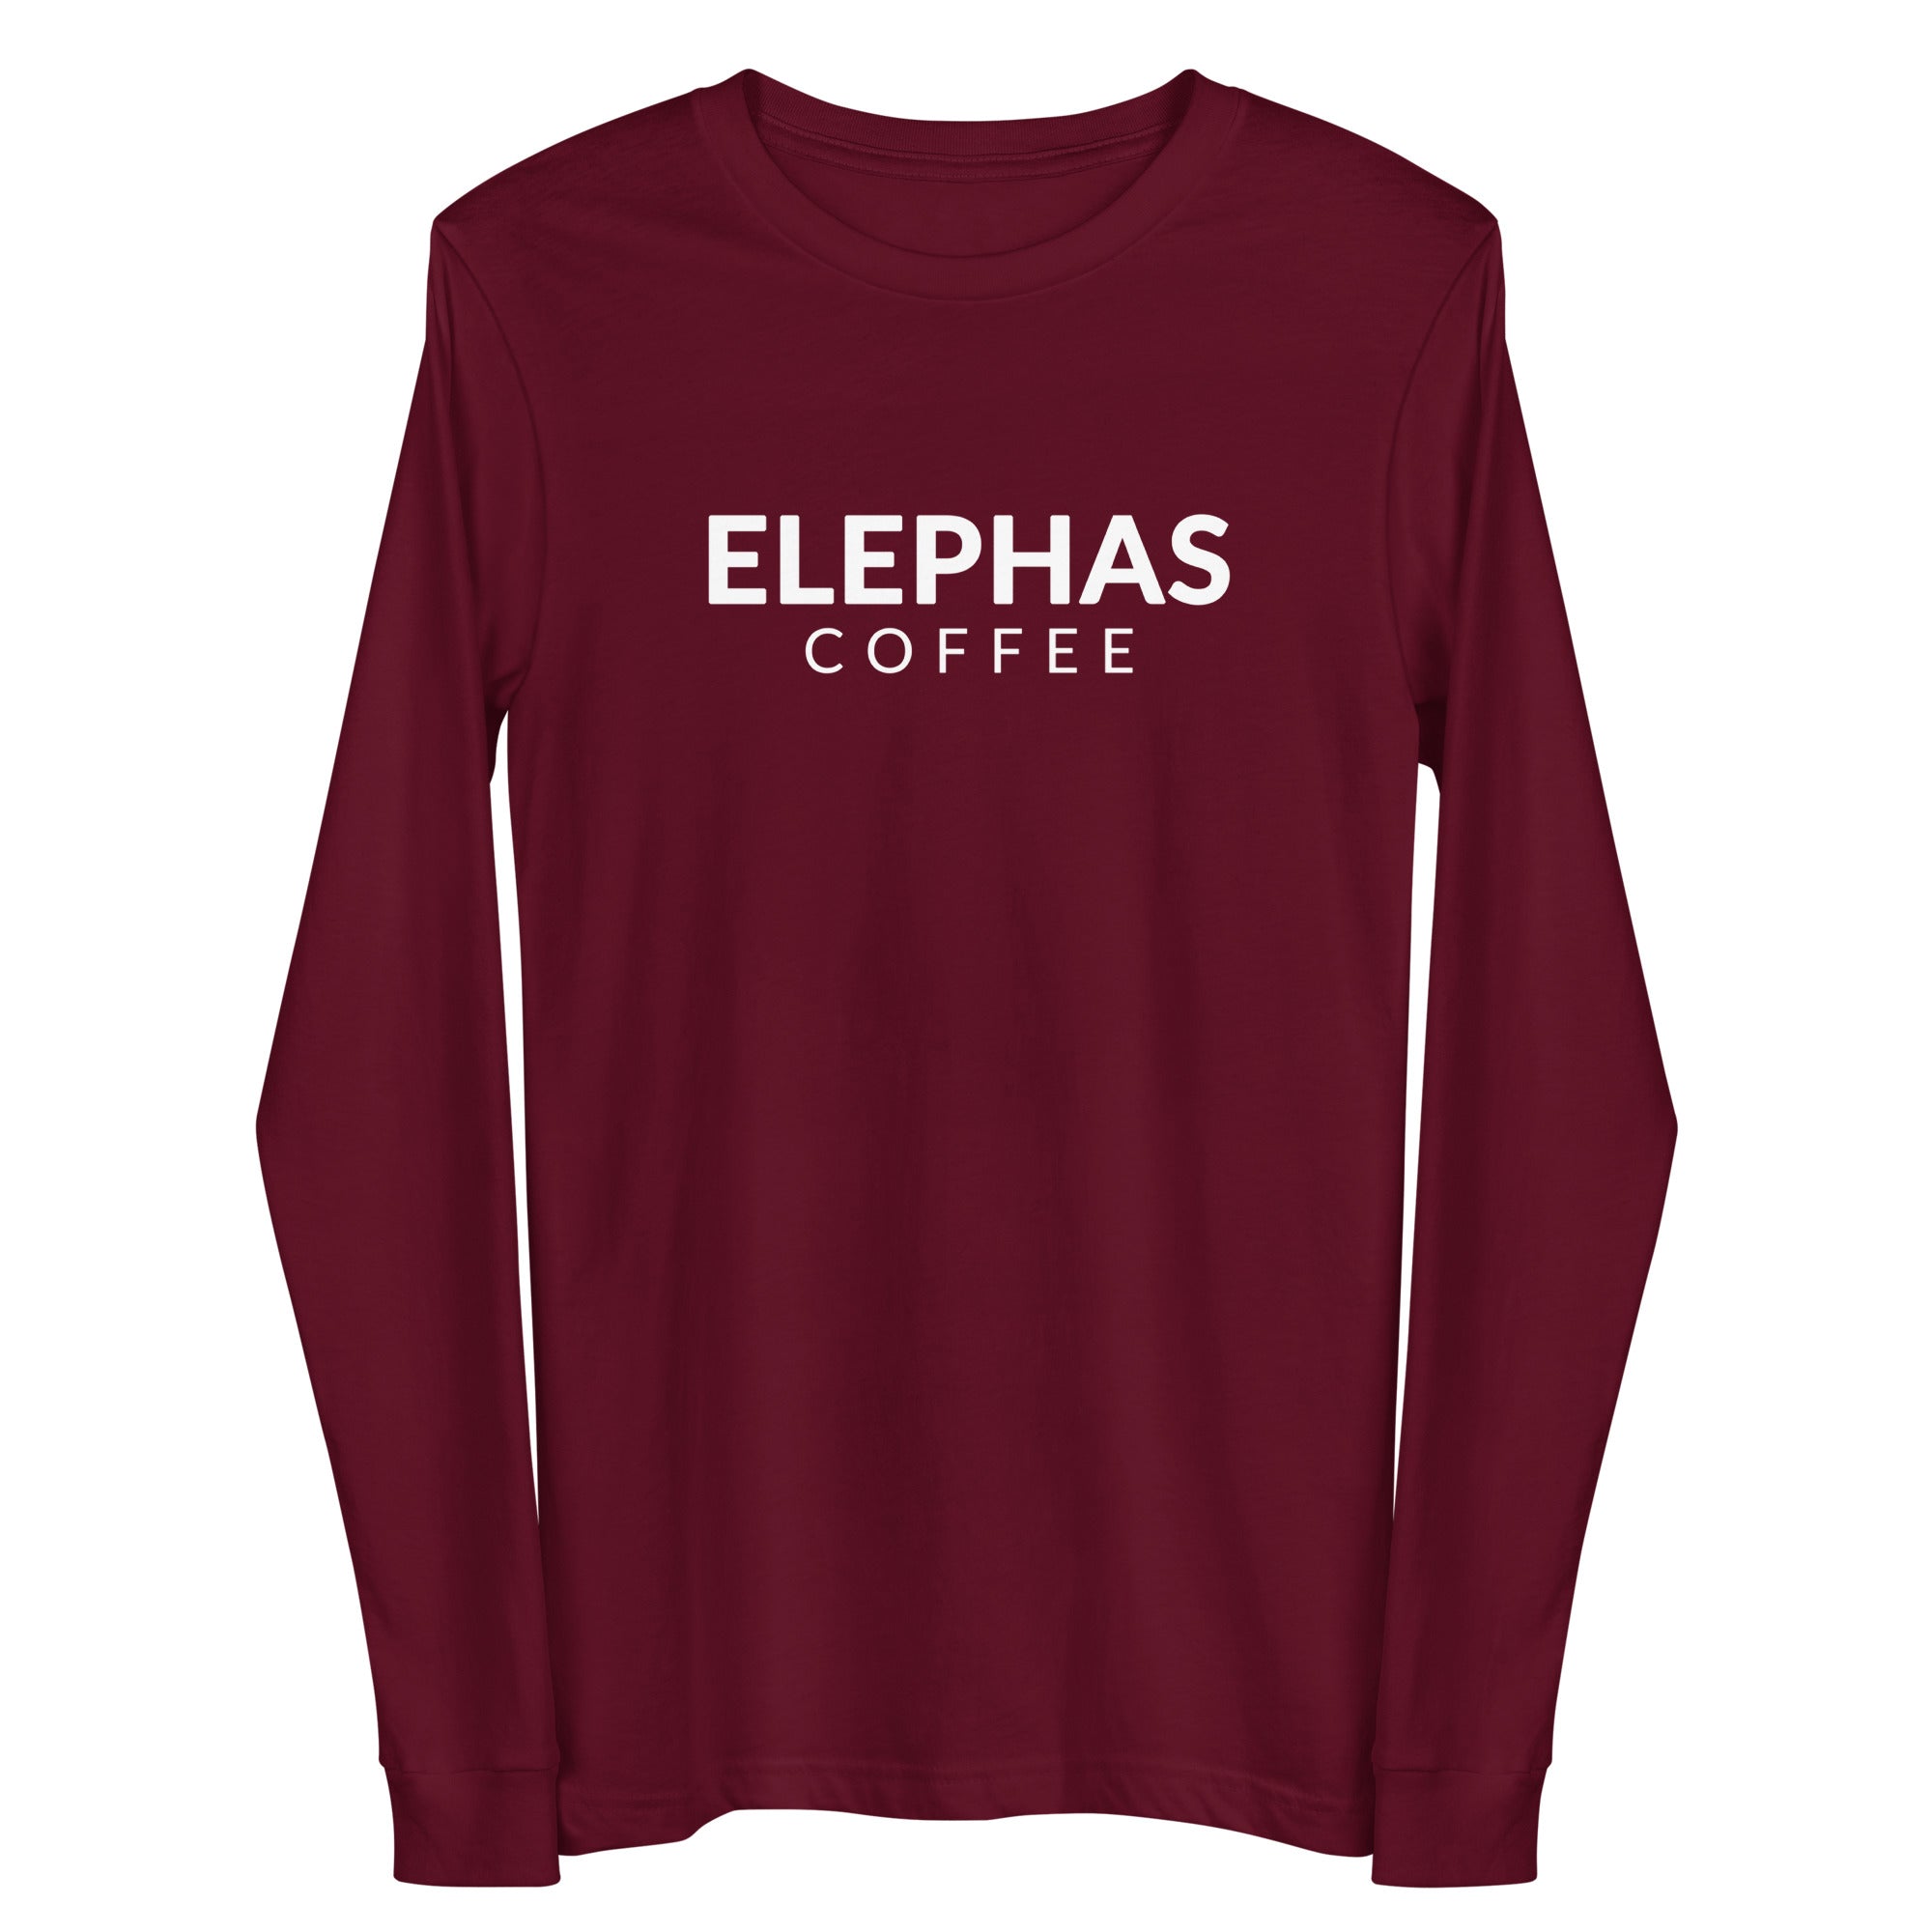 Elephas Coffee - All Caps - Unisex Long Sleeve Tee - Maroon